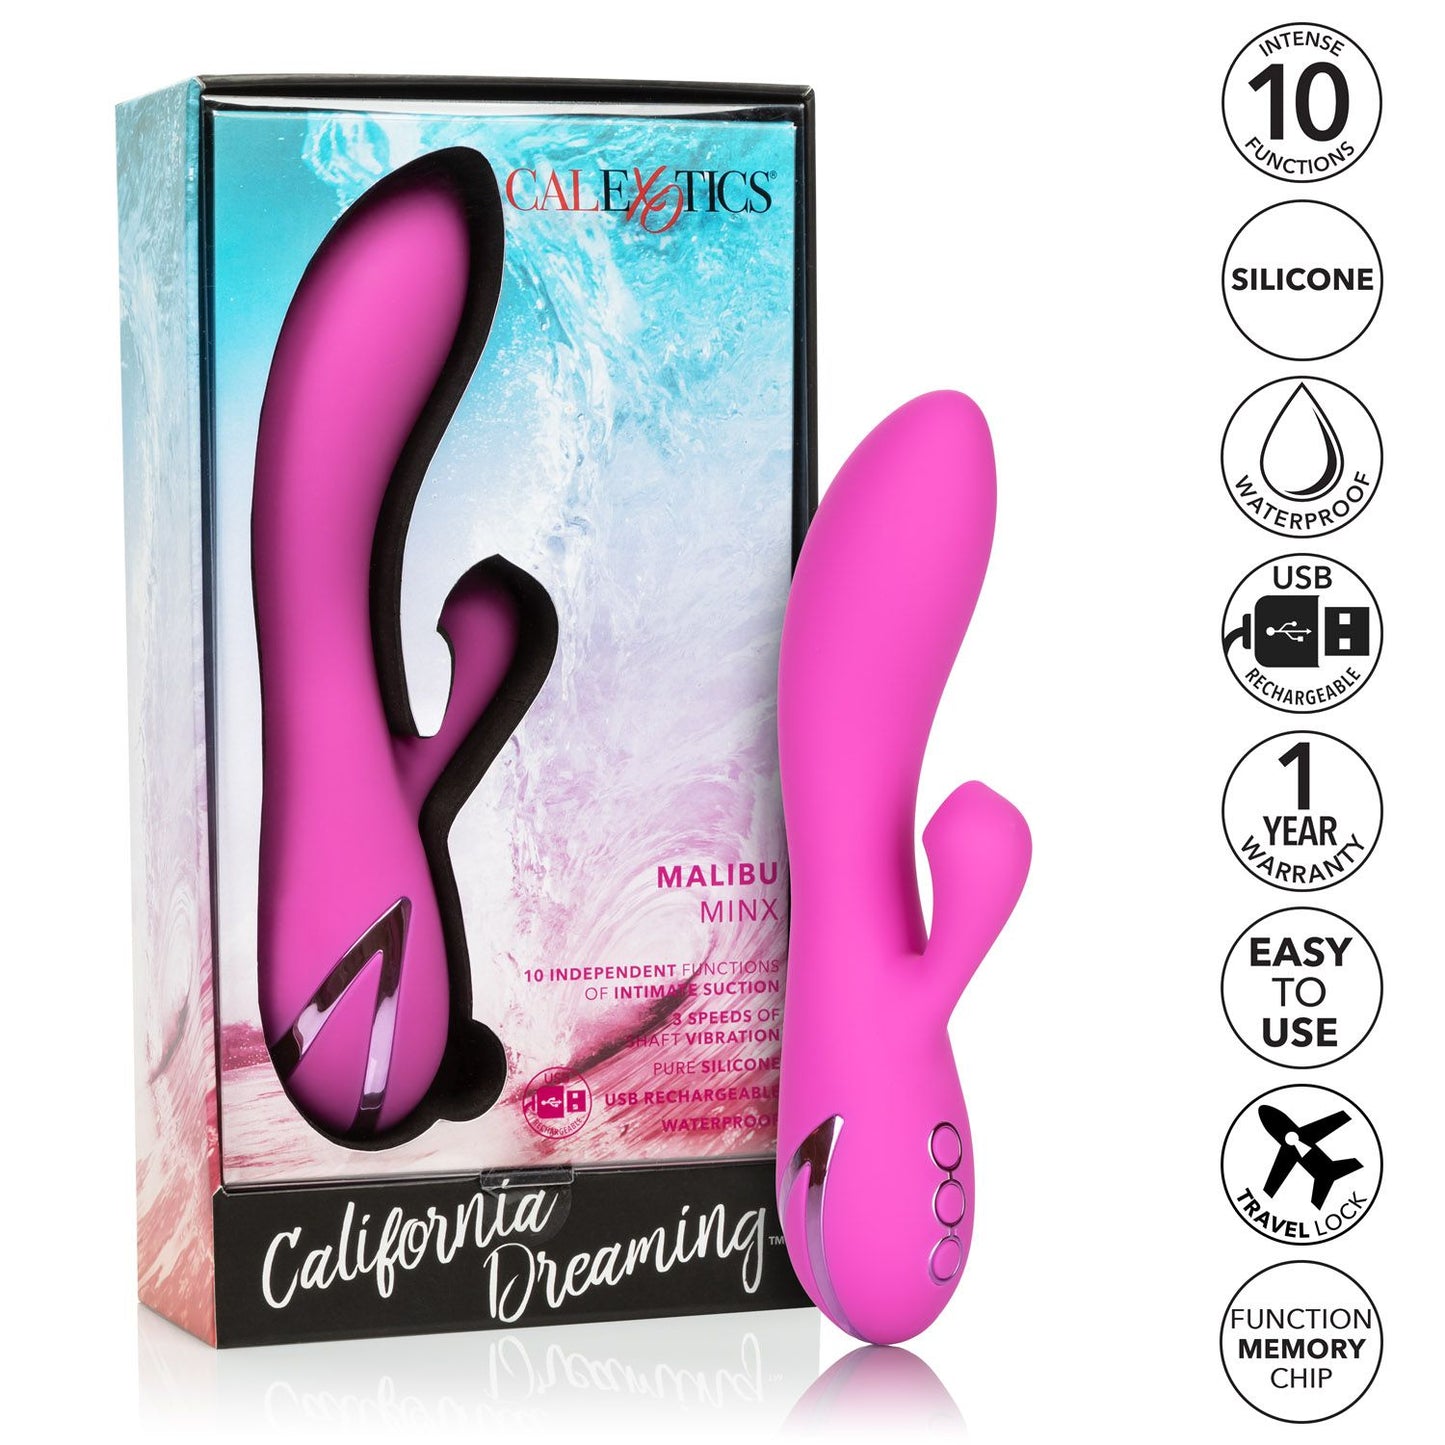 California Dreaming Malibu Minx | best small clit vibrator